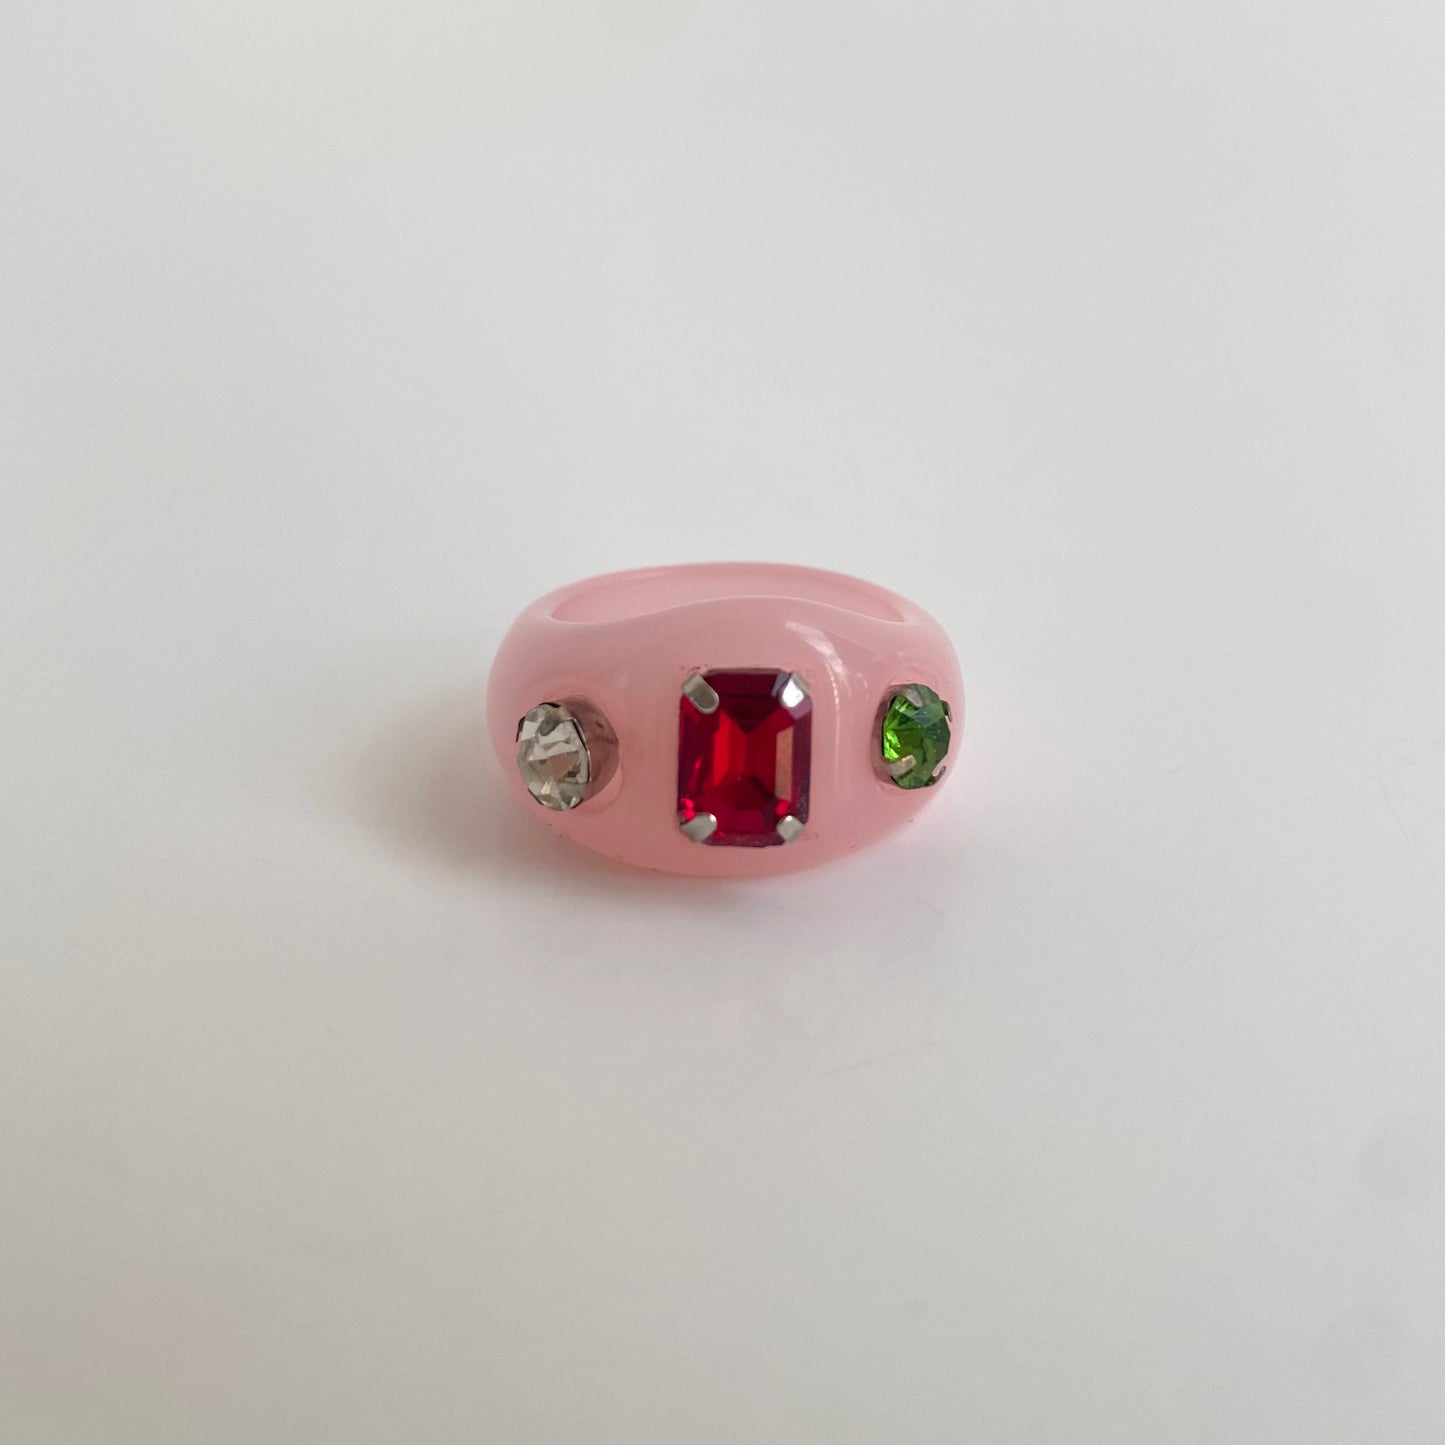 acrylic gem rings in pink